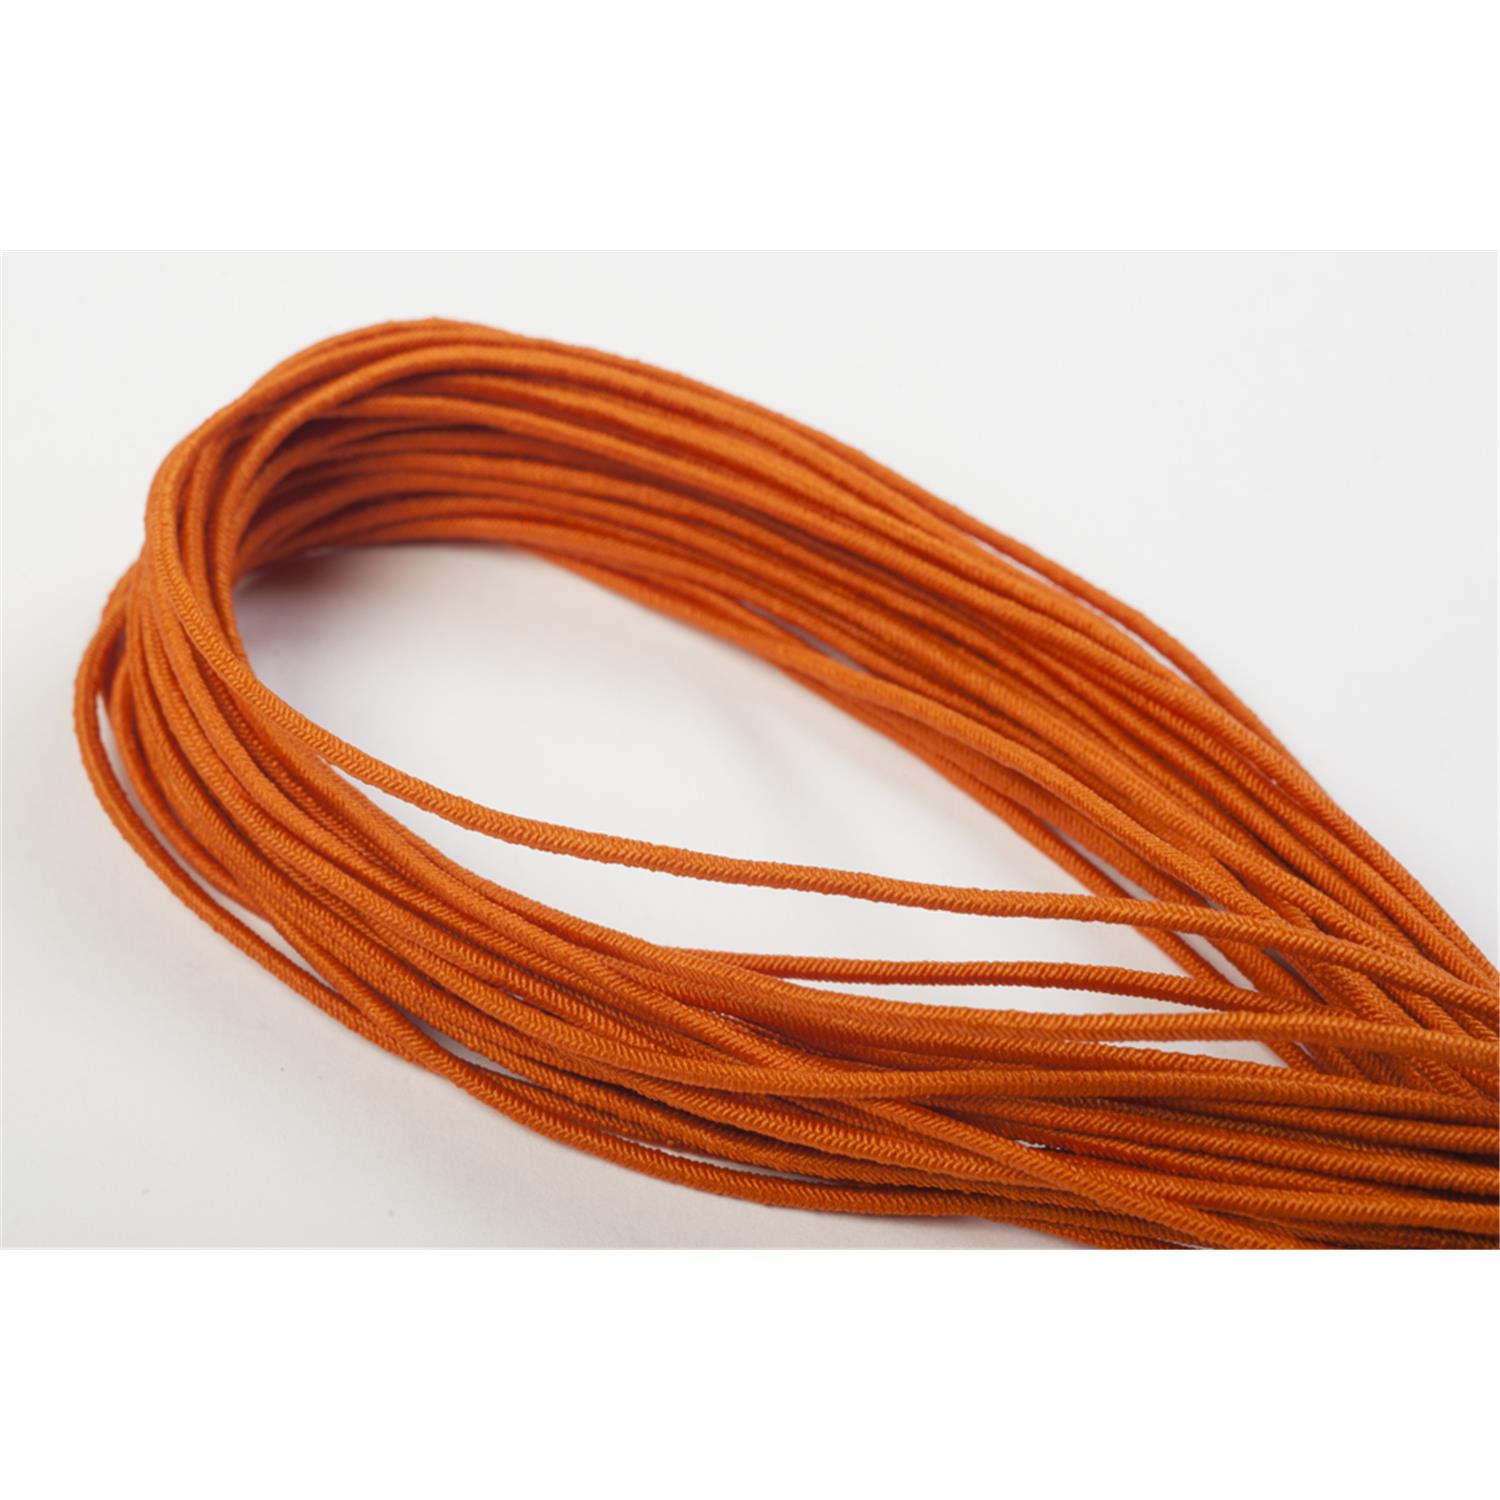 Elastische Kordeln / Hutgummi 1mm dick in 19 Farben 05 / orange 10 m